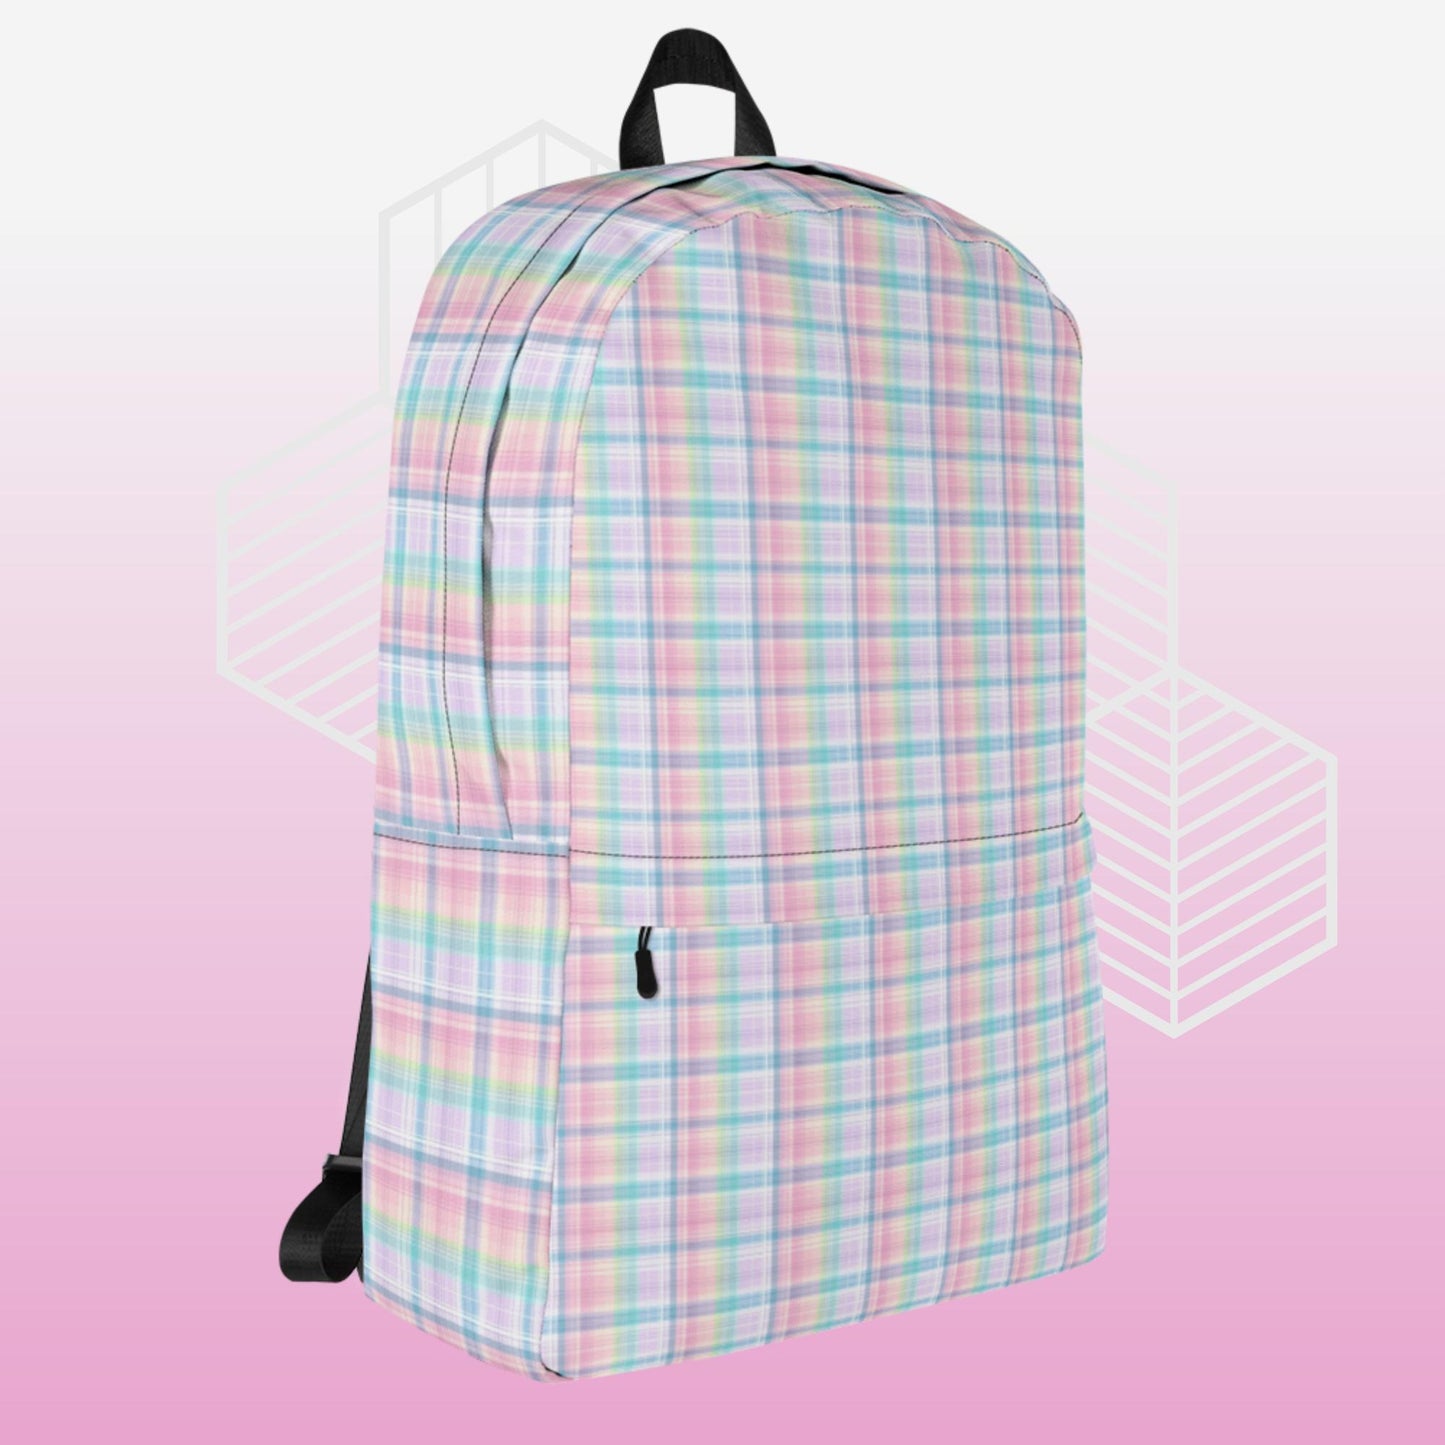 Pastel Flannel Backpack Minimalist Backpack, Backpack with 15" inside pocket for Laptop, Hidden Pocket for Wallet, Lightweight well made